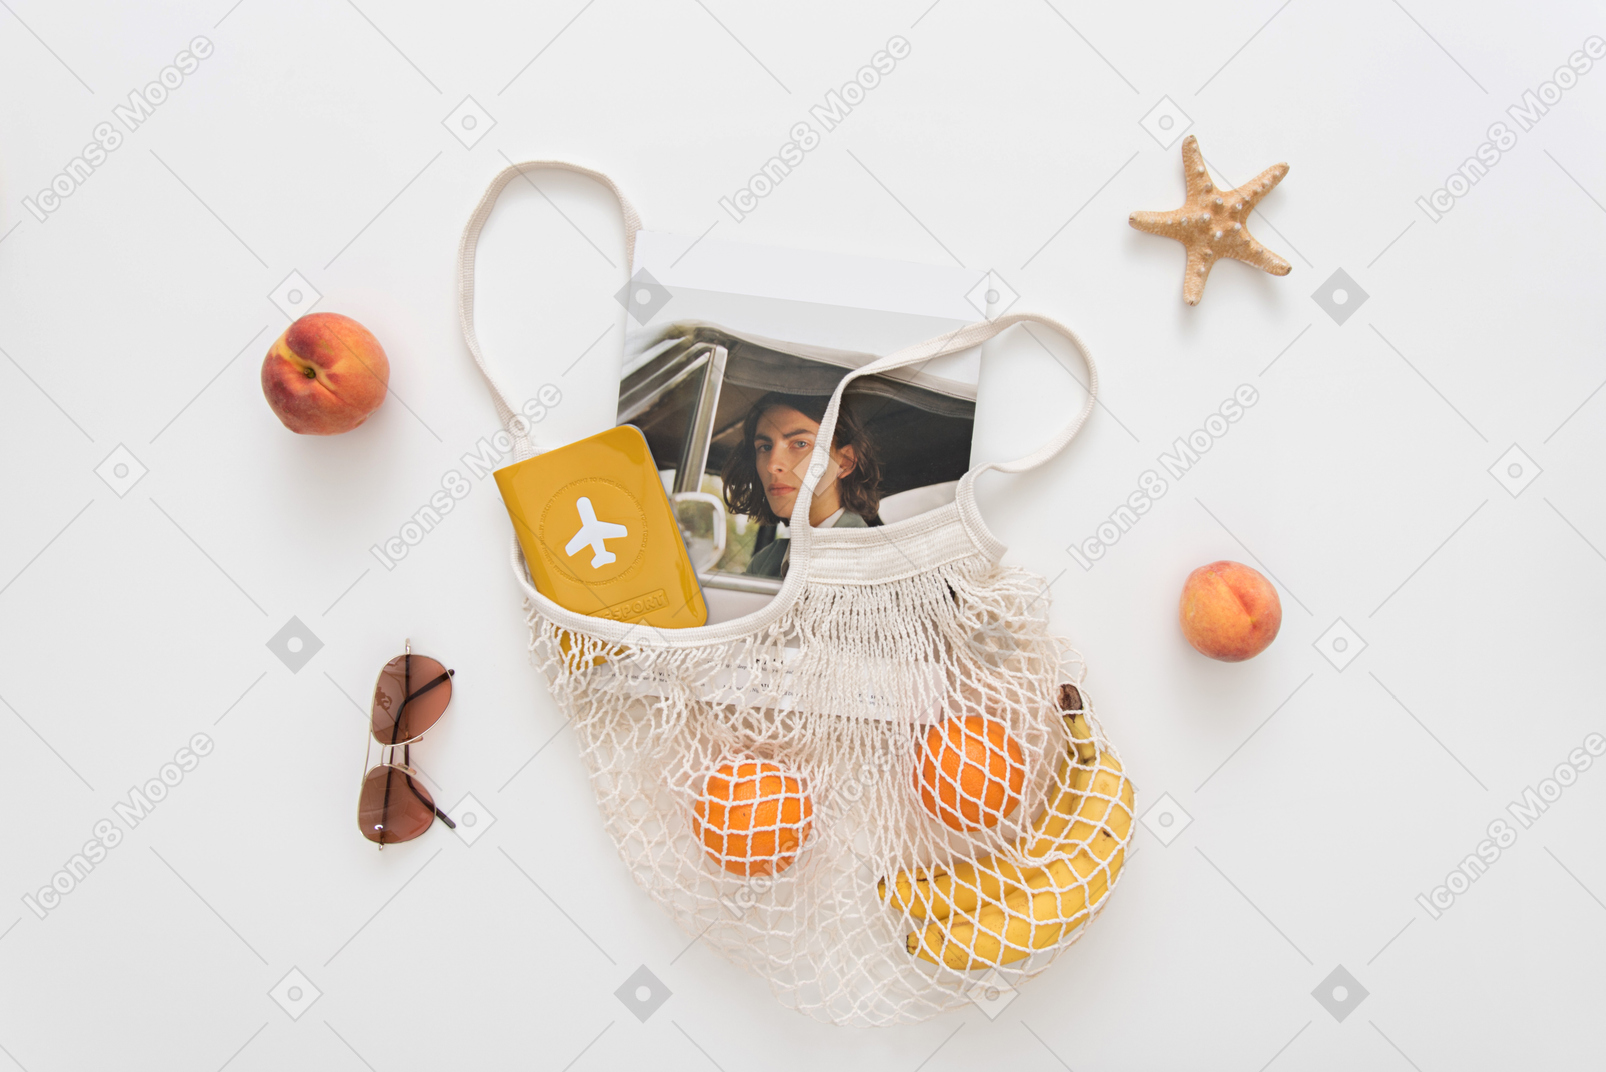 Avoska with fruits, passport cover, magazine and sunglasses